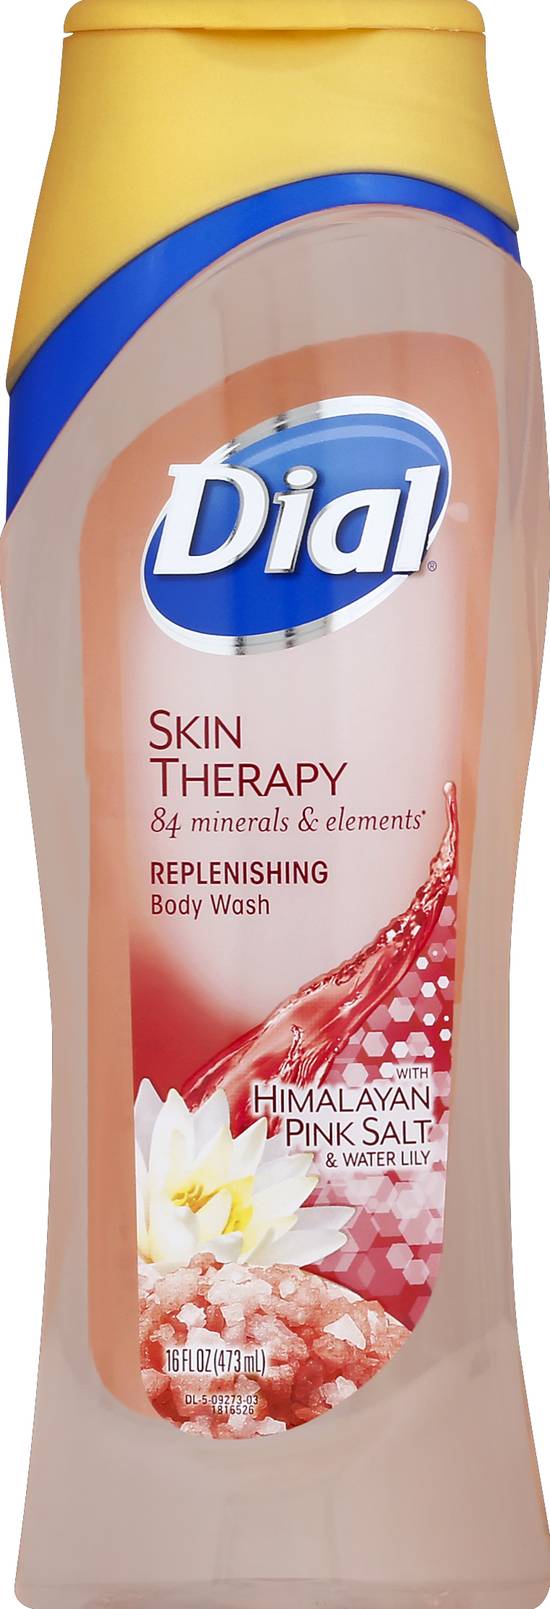 Dial Skin Therapy Himalayan Pink Salt Replenishing Body Wash